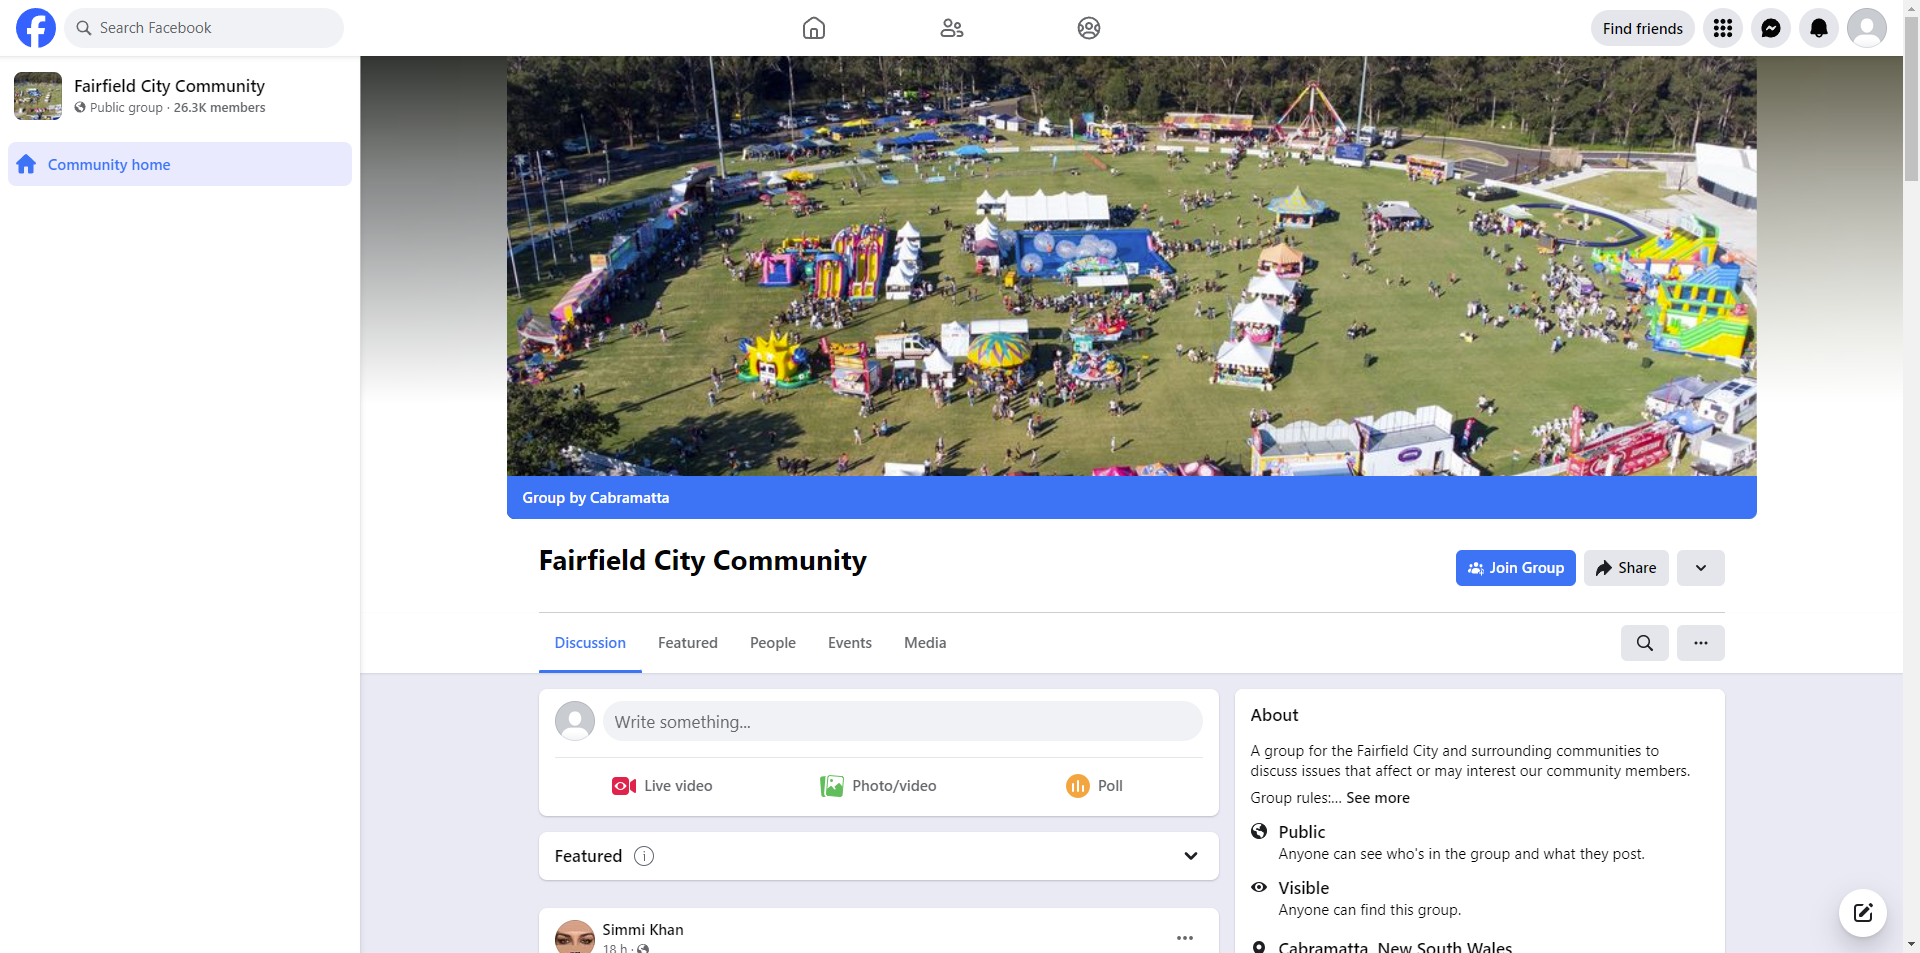 Fairfield City Community